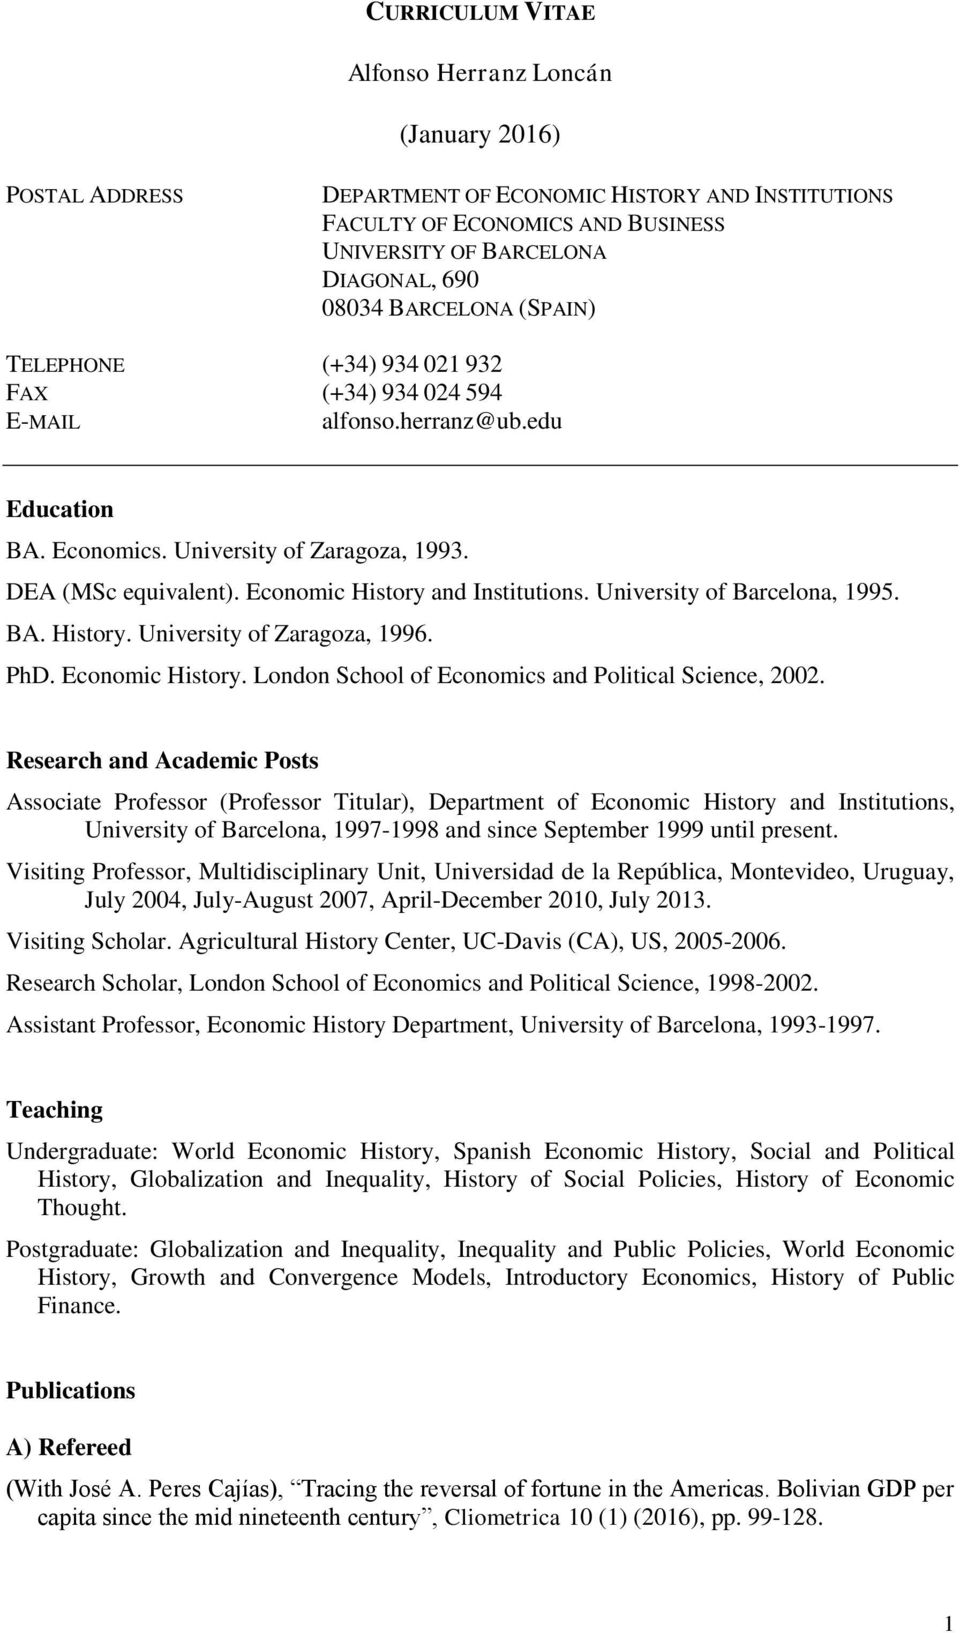 Economic History and Institutions. University of Barcelona, 1995. BA. History. University of Zaragoza, 1996. PhD. Economic History. London School of Economics and Political Science, 2002.